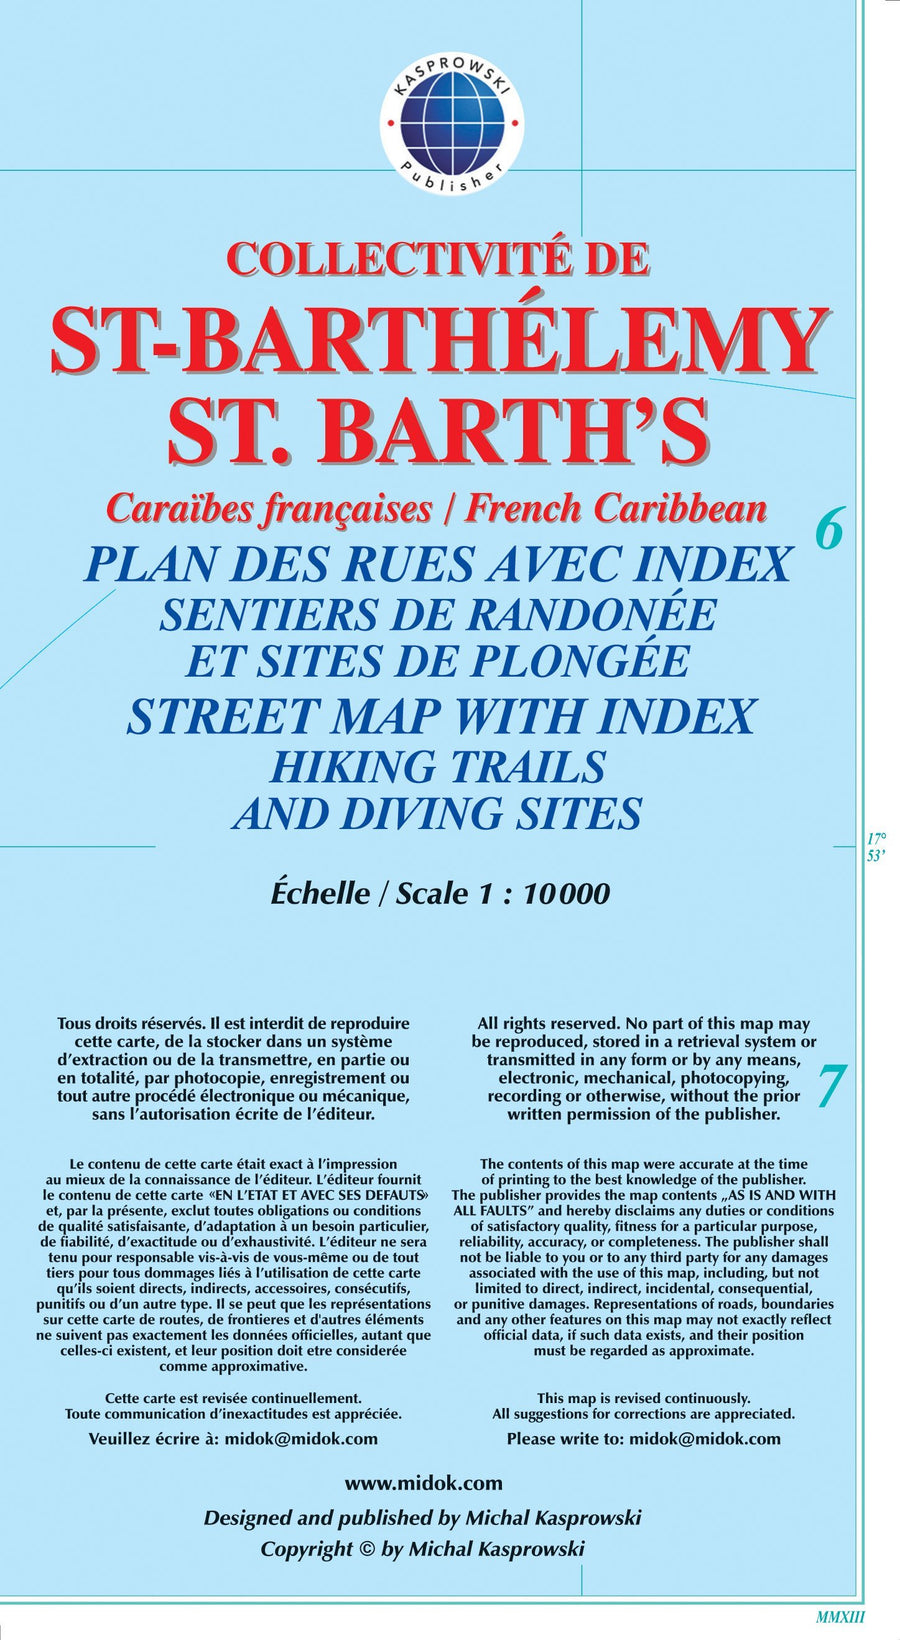 Carte topographique - Saint-Barthélemy, St. Barth's (French Caribbean) | Kasprowski carte pliée Kasprowski 